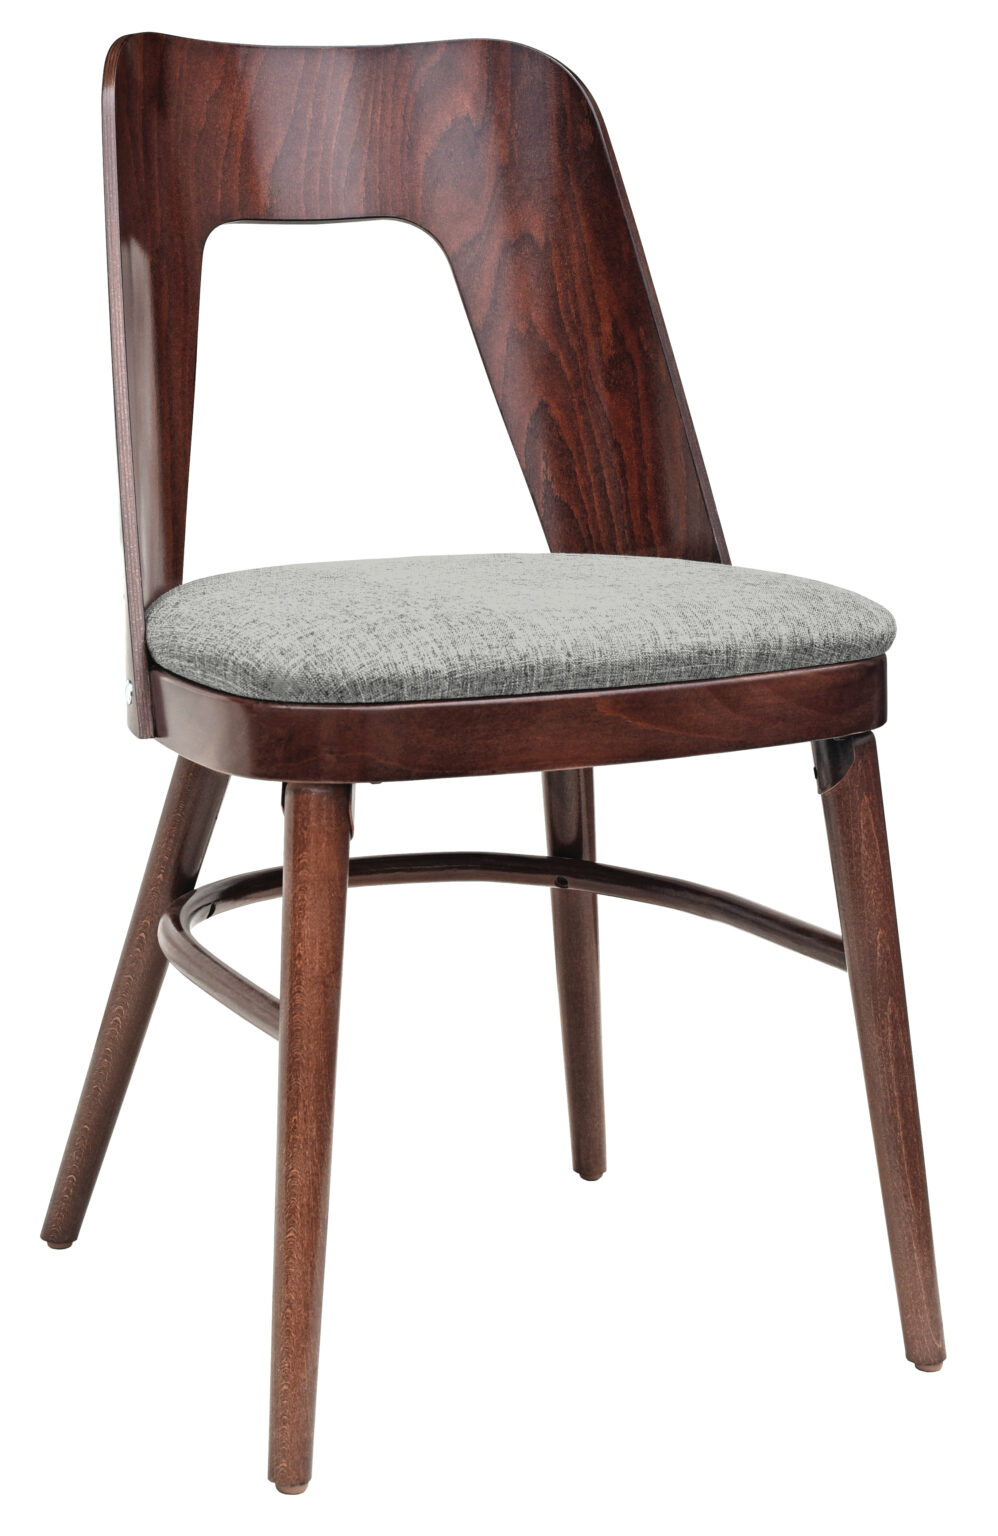 Wood Chairs | Eagle Chair, Inc.